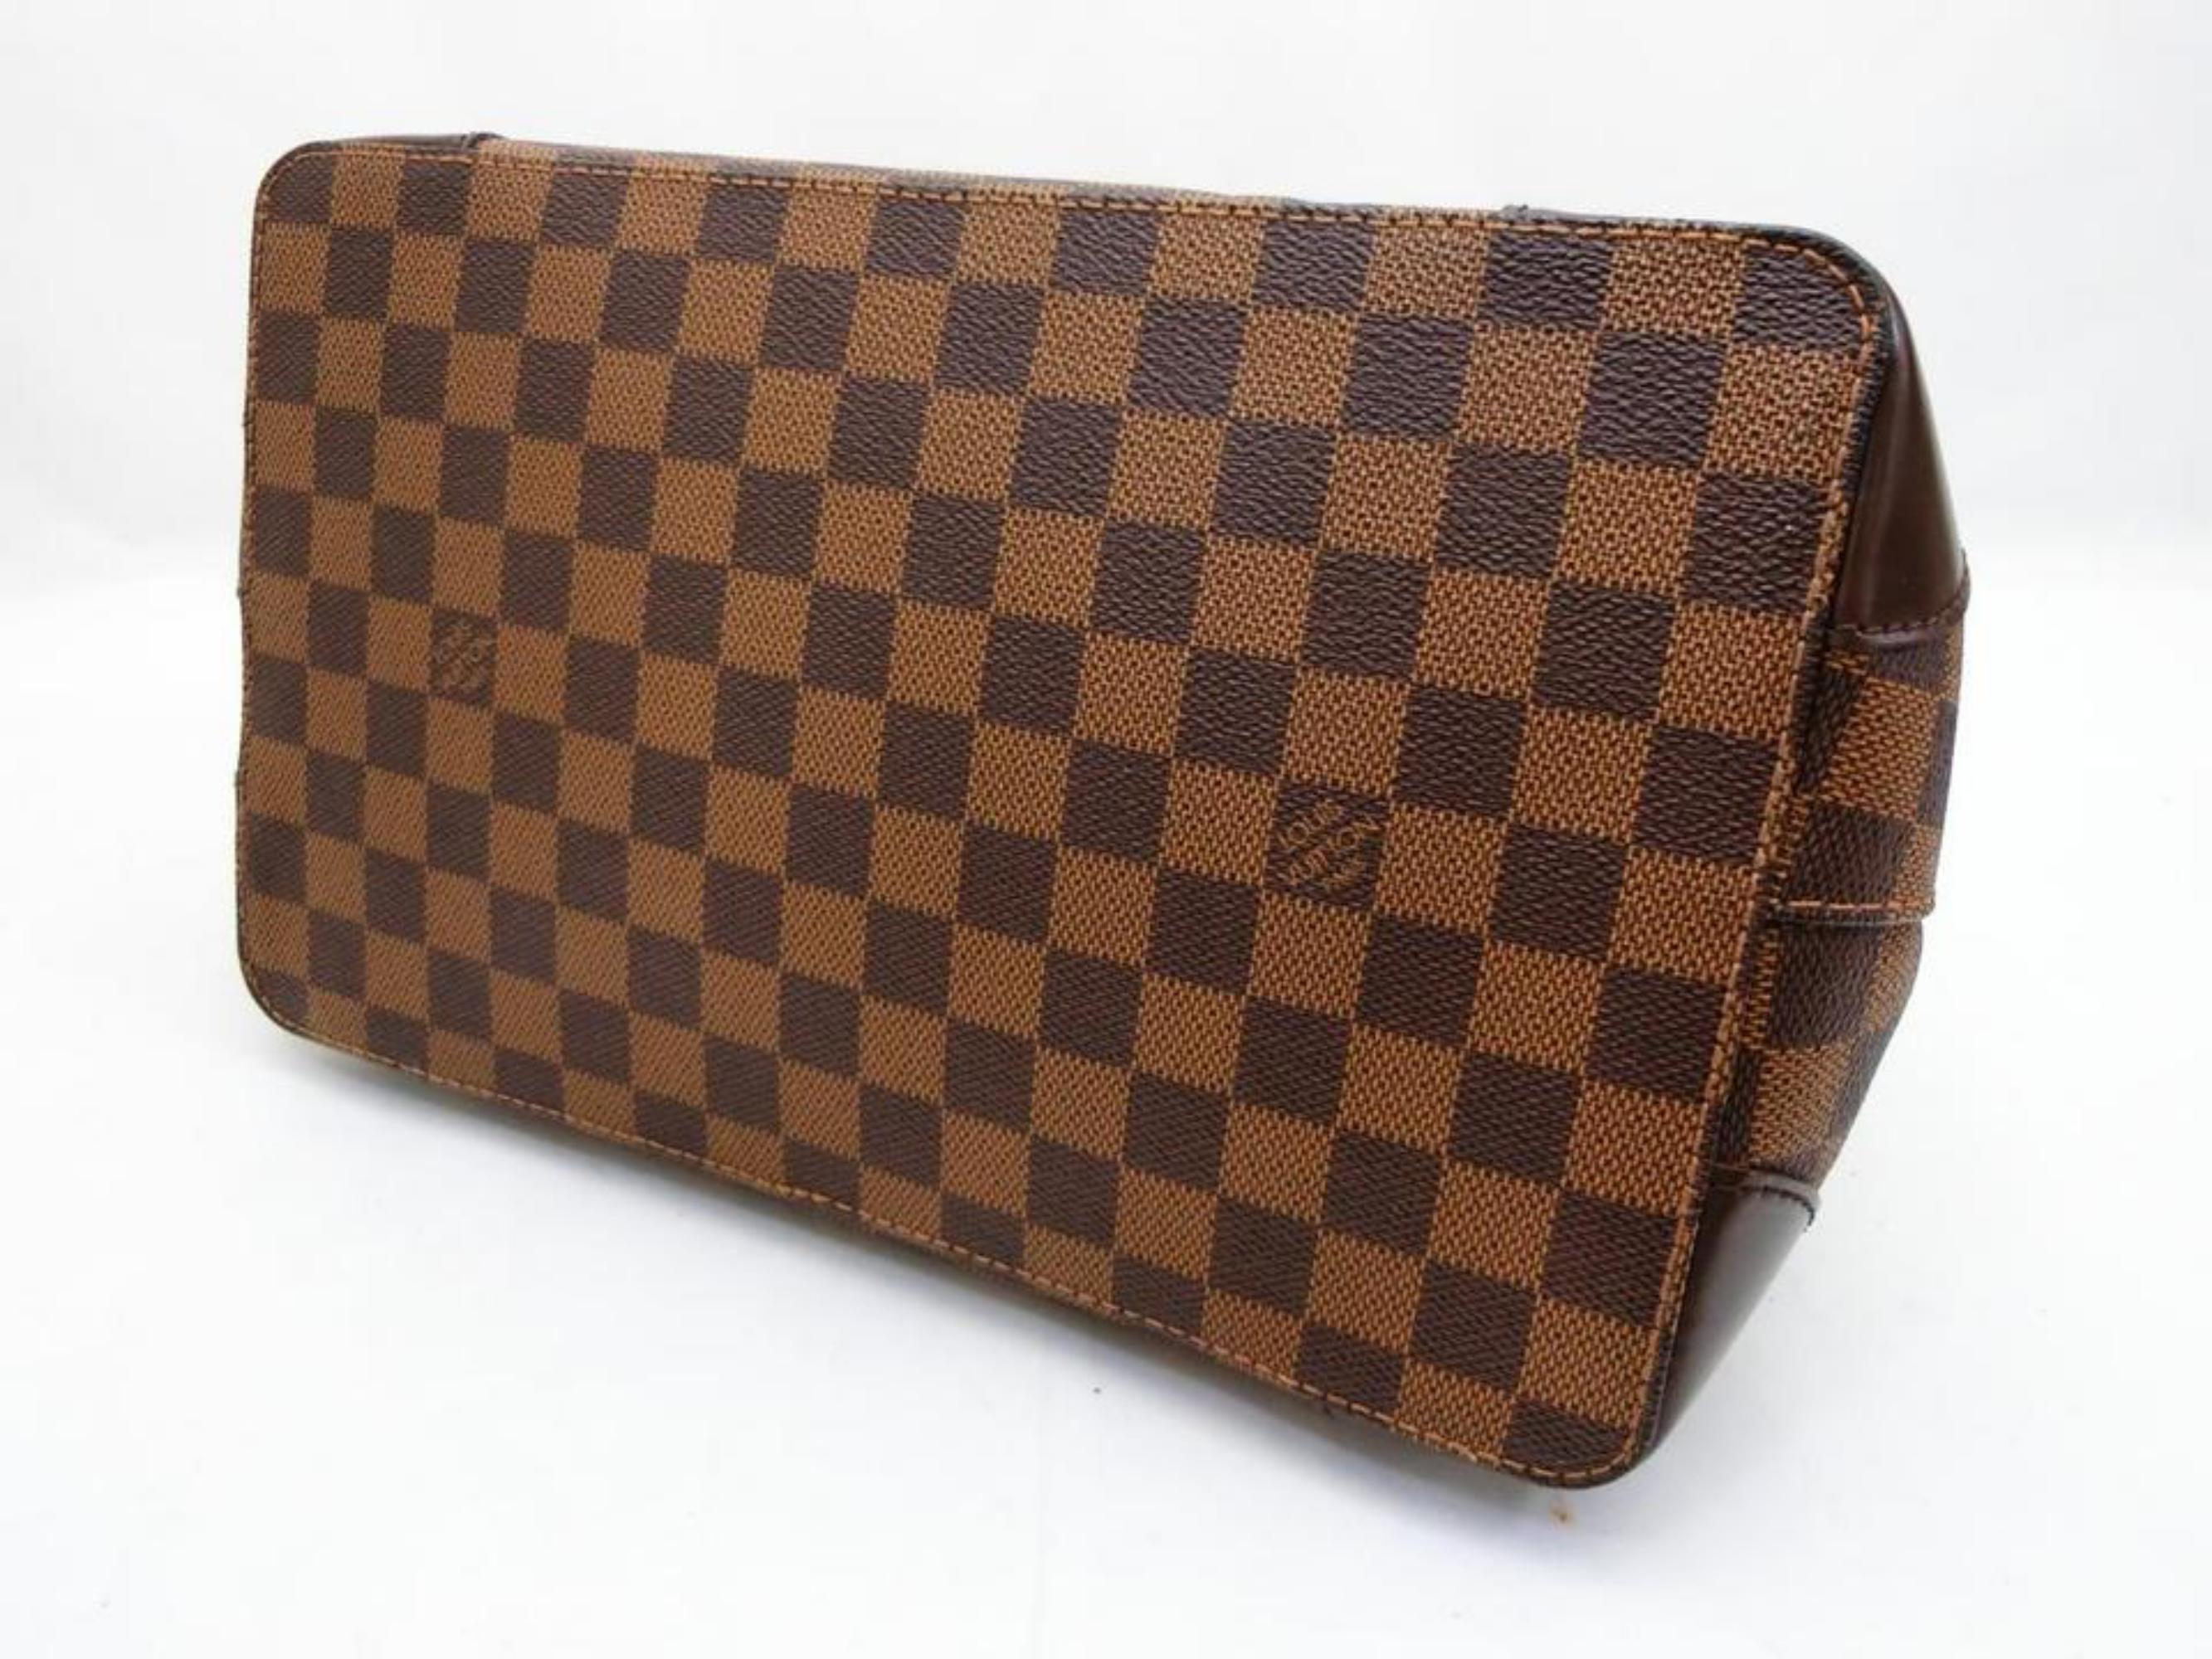 Louis Vuitton Hampstead Damier Ebene Pm 230090 Brown Coated Canvas Shoulder Bag For Sale 2